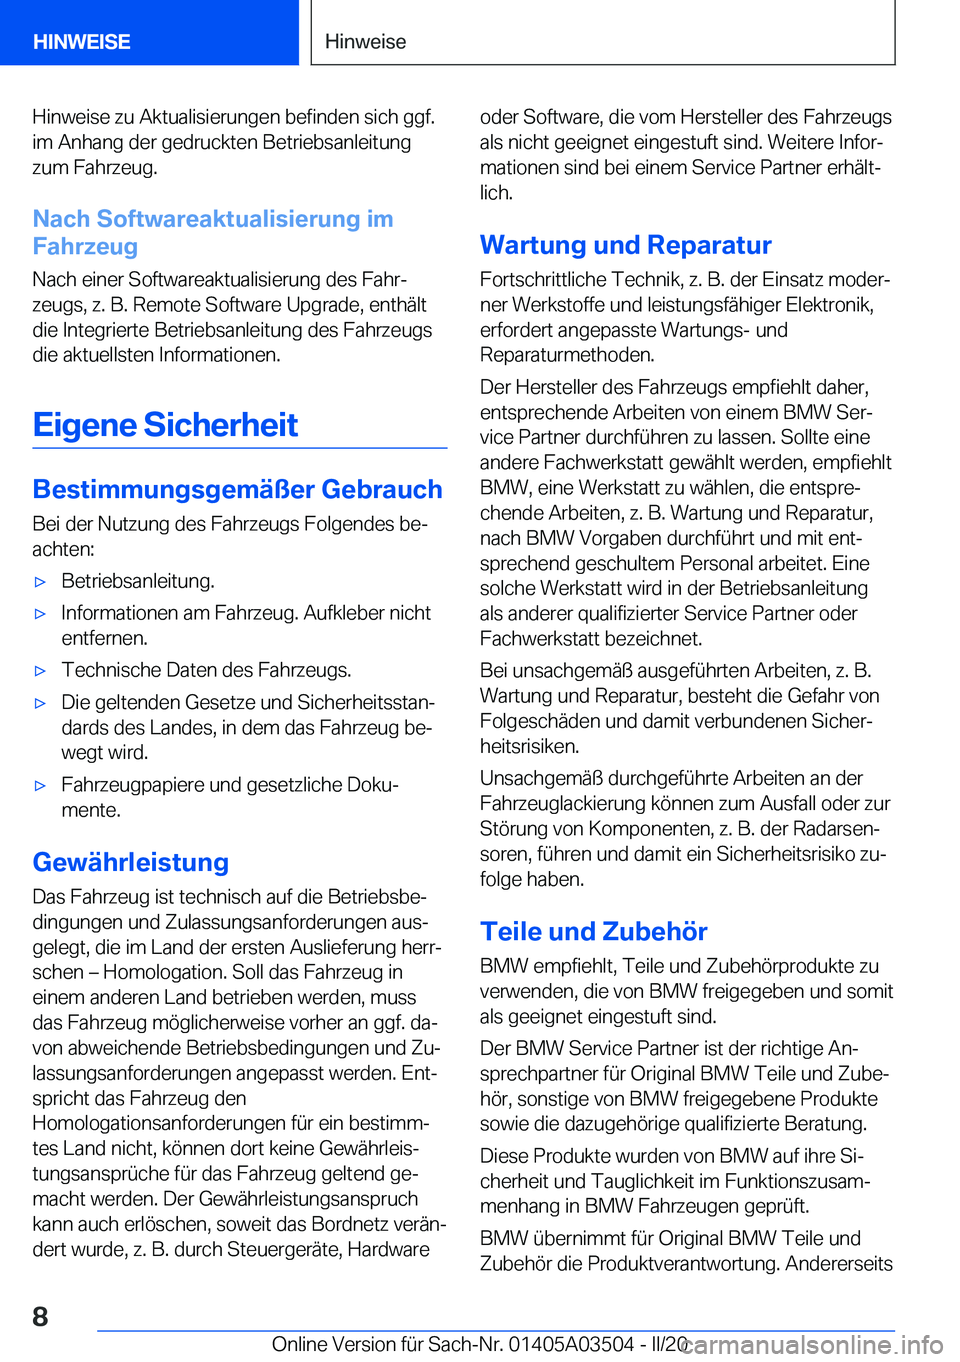 BMW X3 2020  Betriebsanleitungen (in German) �H�i�n�w�e�i�s�e��z�u��A�k�t�u�a�l�i�s�i�e�r�u�n�g�e�n��b�e�f�i�n�d�e�n��s�i�c�h��g�g�f�.�i�m��A�n�h�a�n�g��d�e�r��g�e�d�r�u�c�k�t�e�n��B�e�t�r�i�e�b�s�a�n�l�e�i�t�u�n�g�z�u�m��F�a�h�r�z�e�u